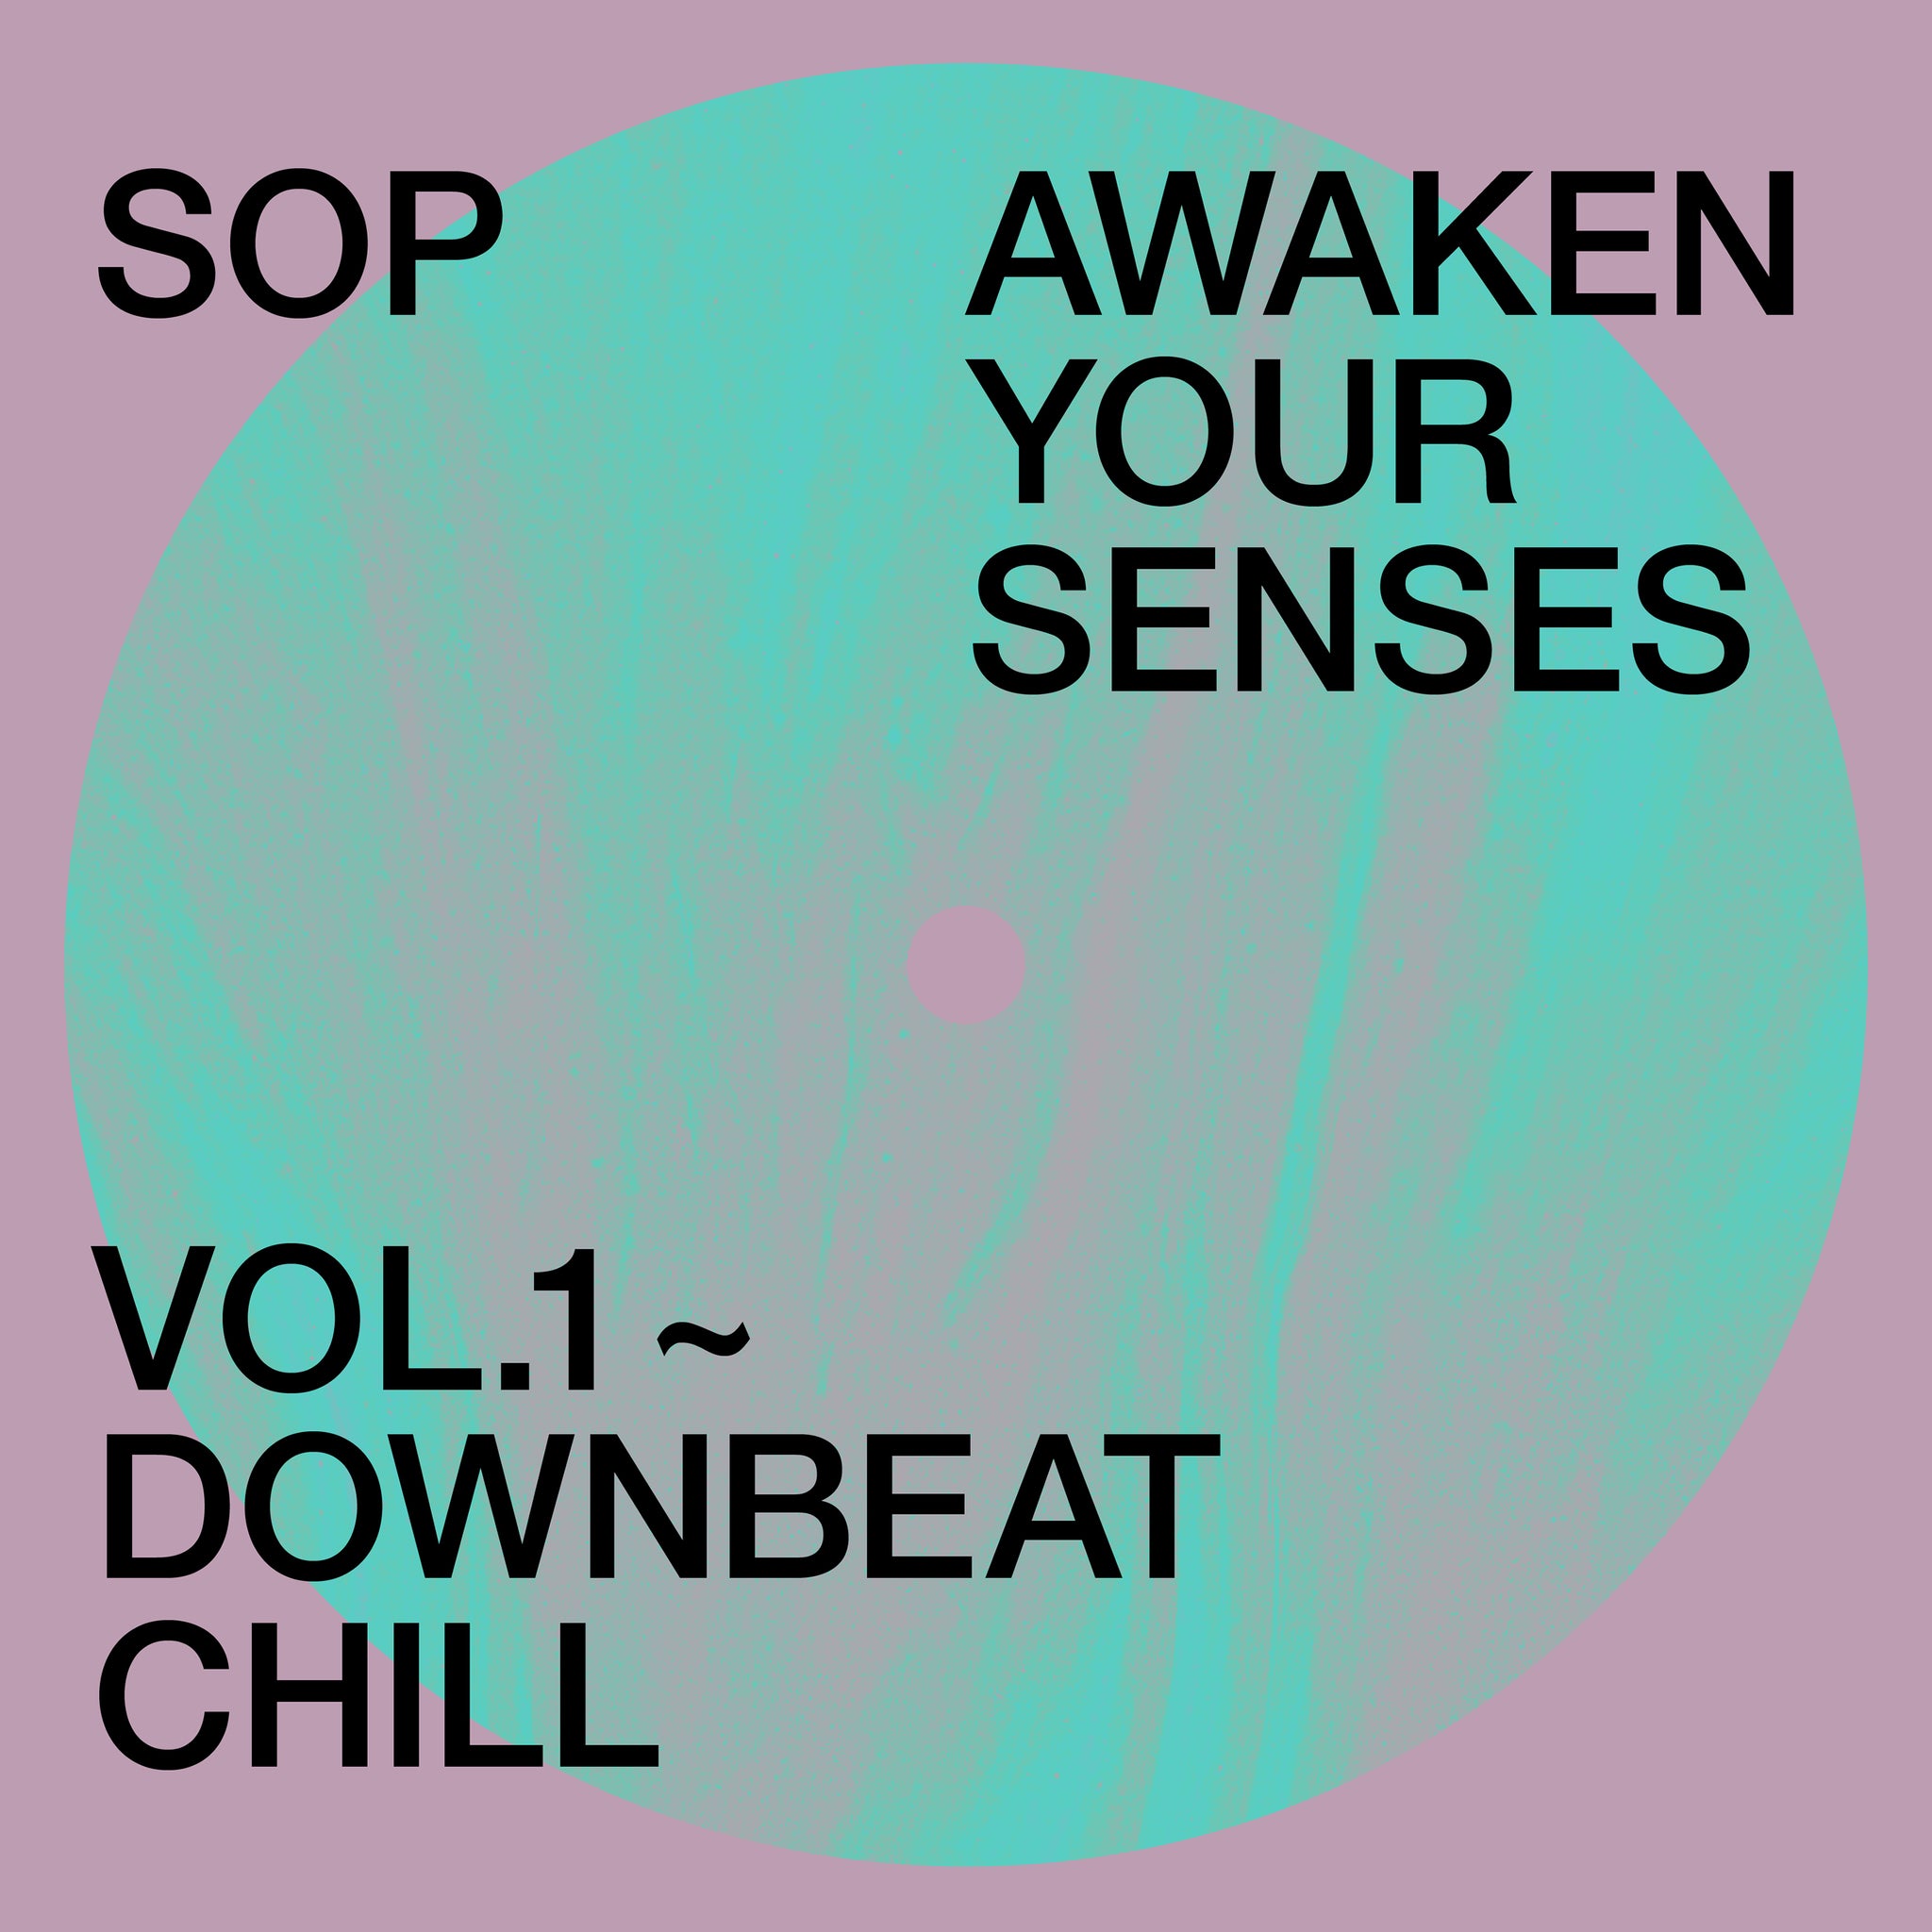 Awaken your senses with Vol 1~ Downbeat Chill